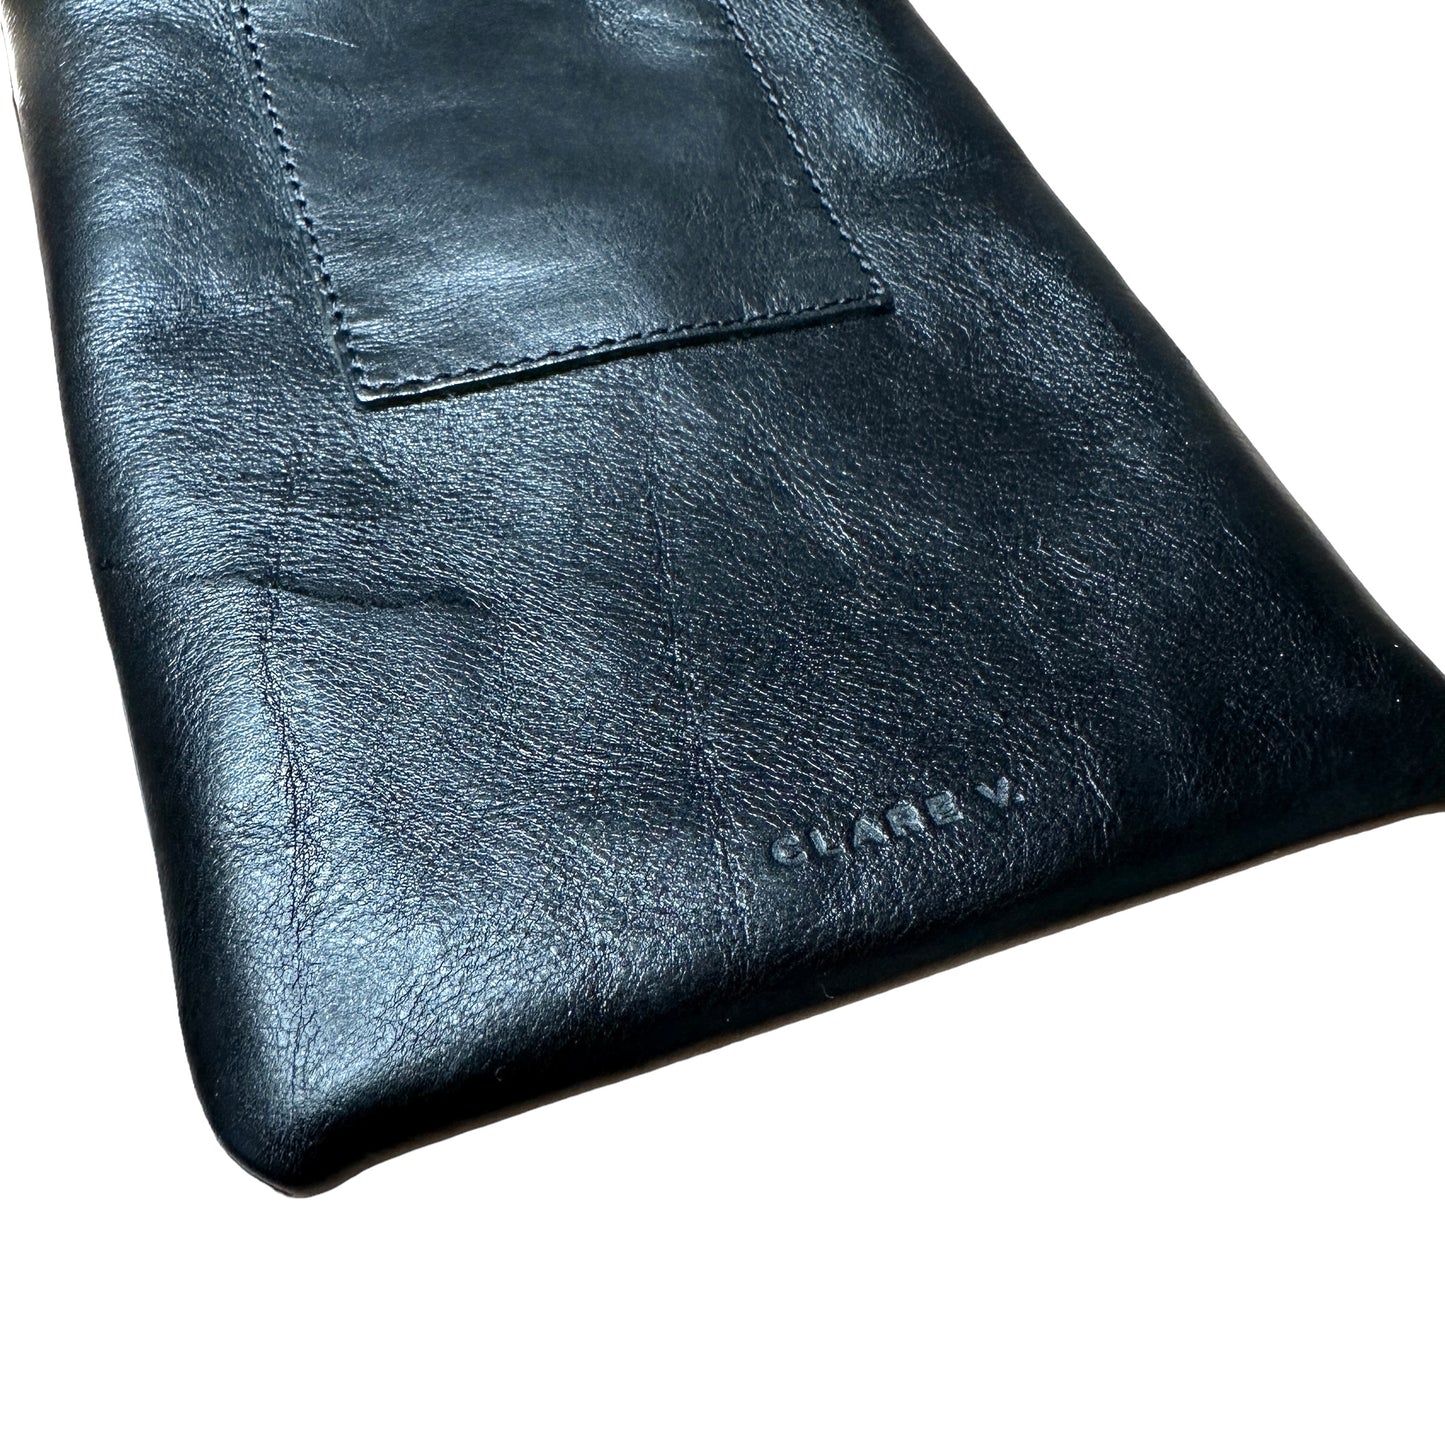 Black Leather Phone Bag